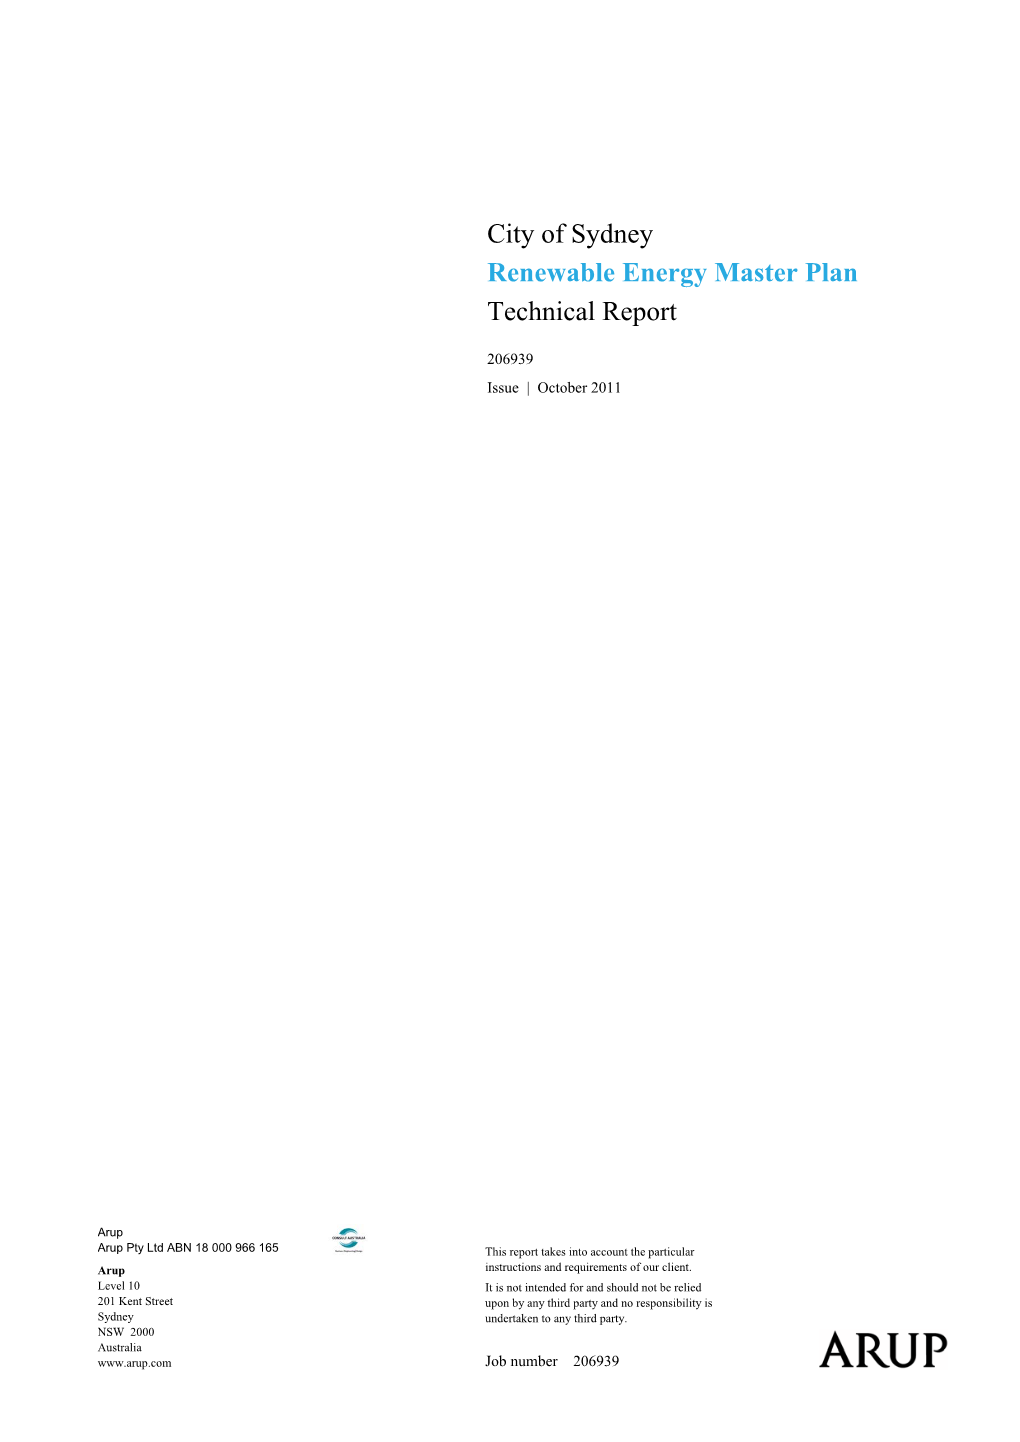 City of Sydney Renewable Energy Master Plan Technical Report